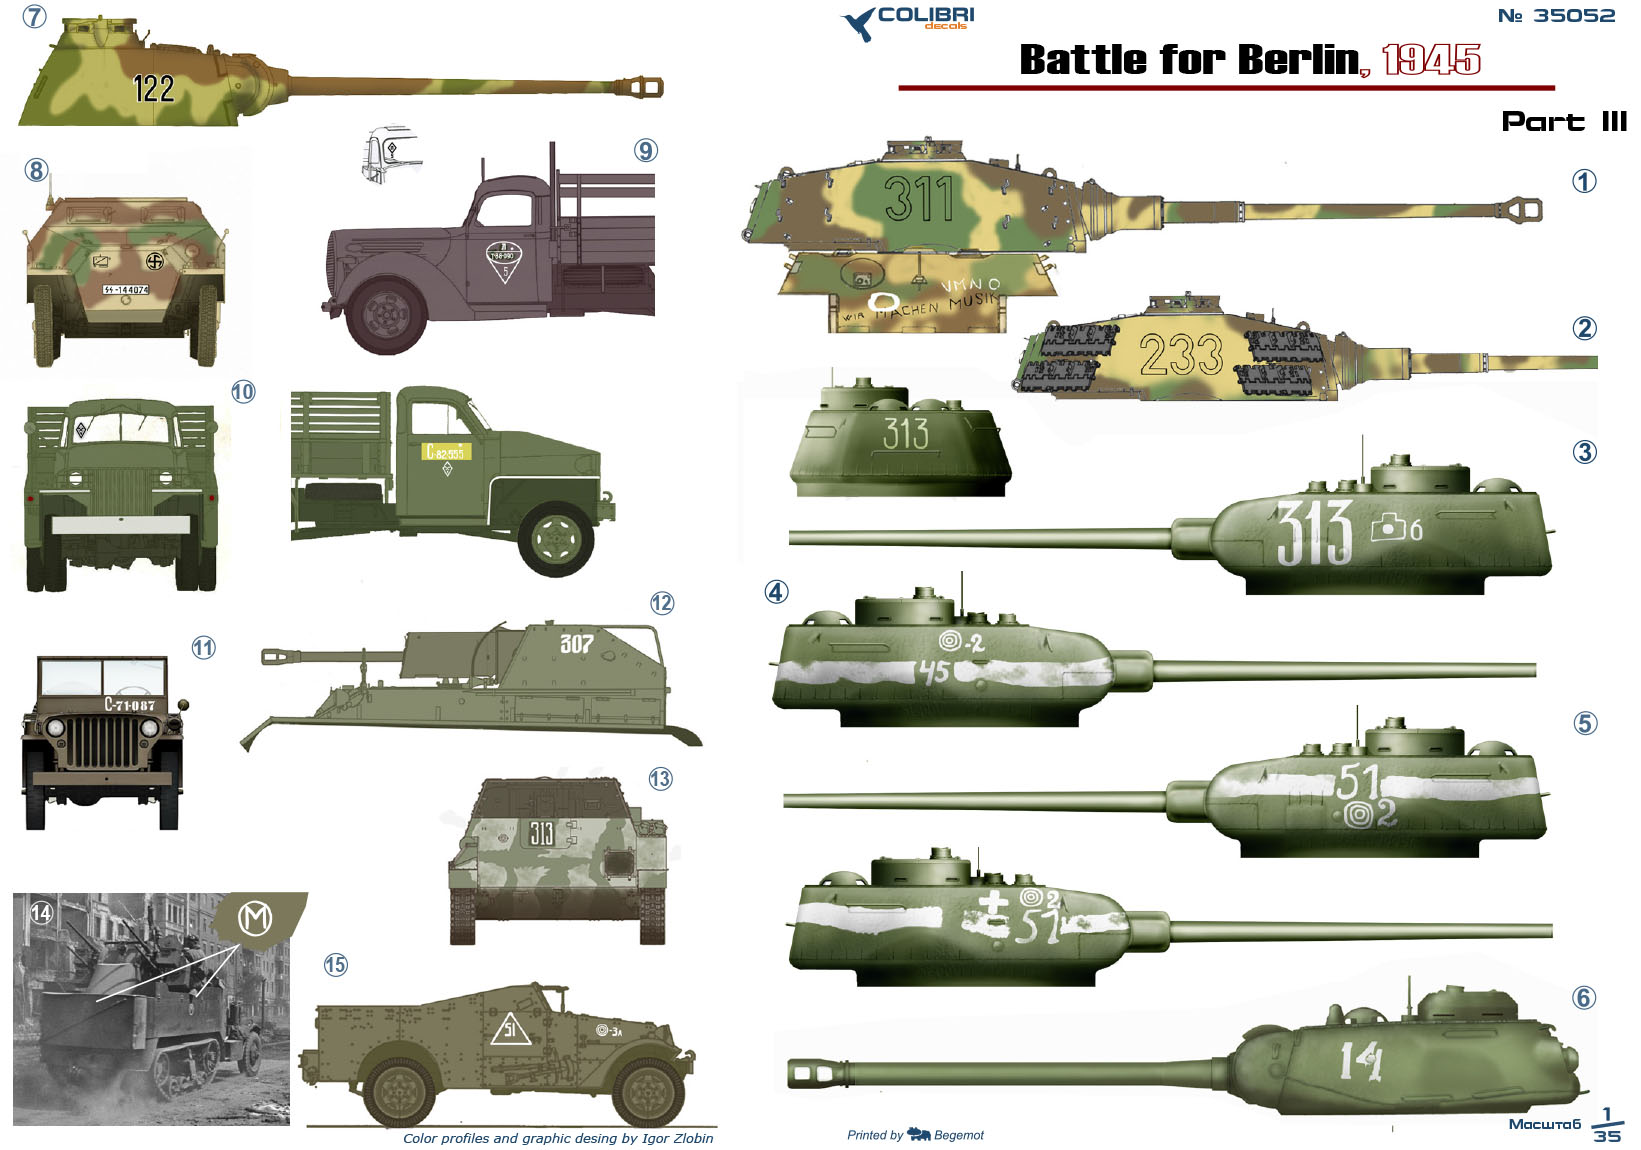 Decal 1/35 Battle for Berlin 45 - Part III (Colibri Decals)